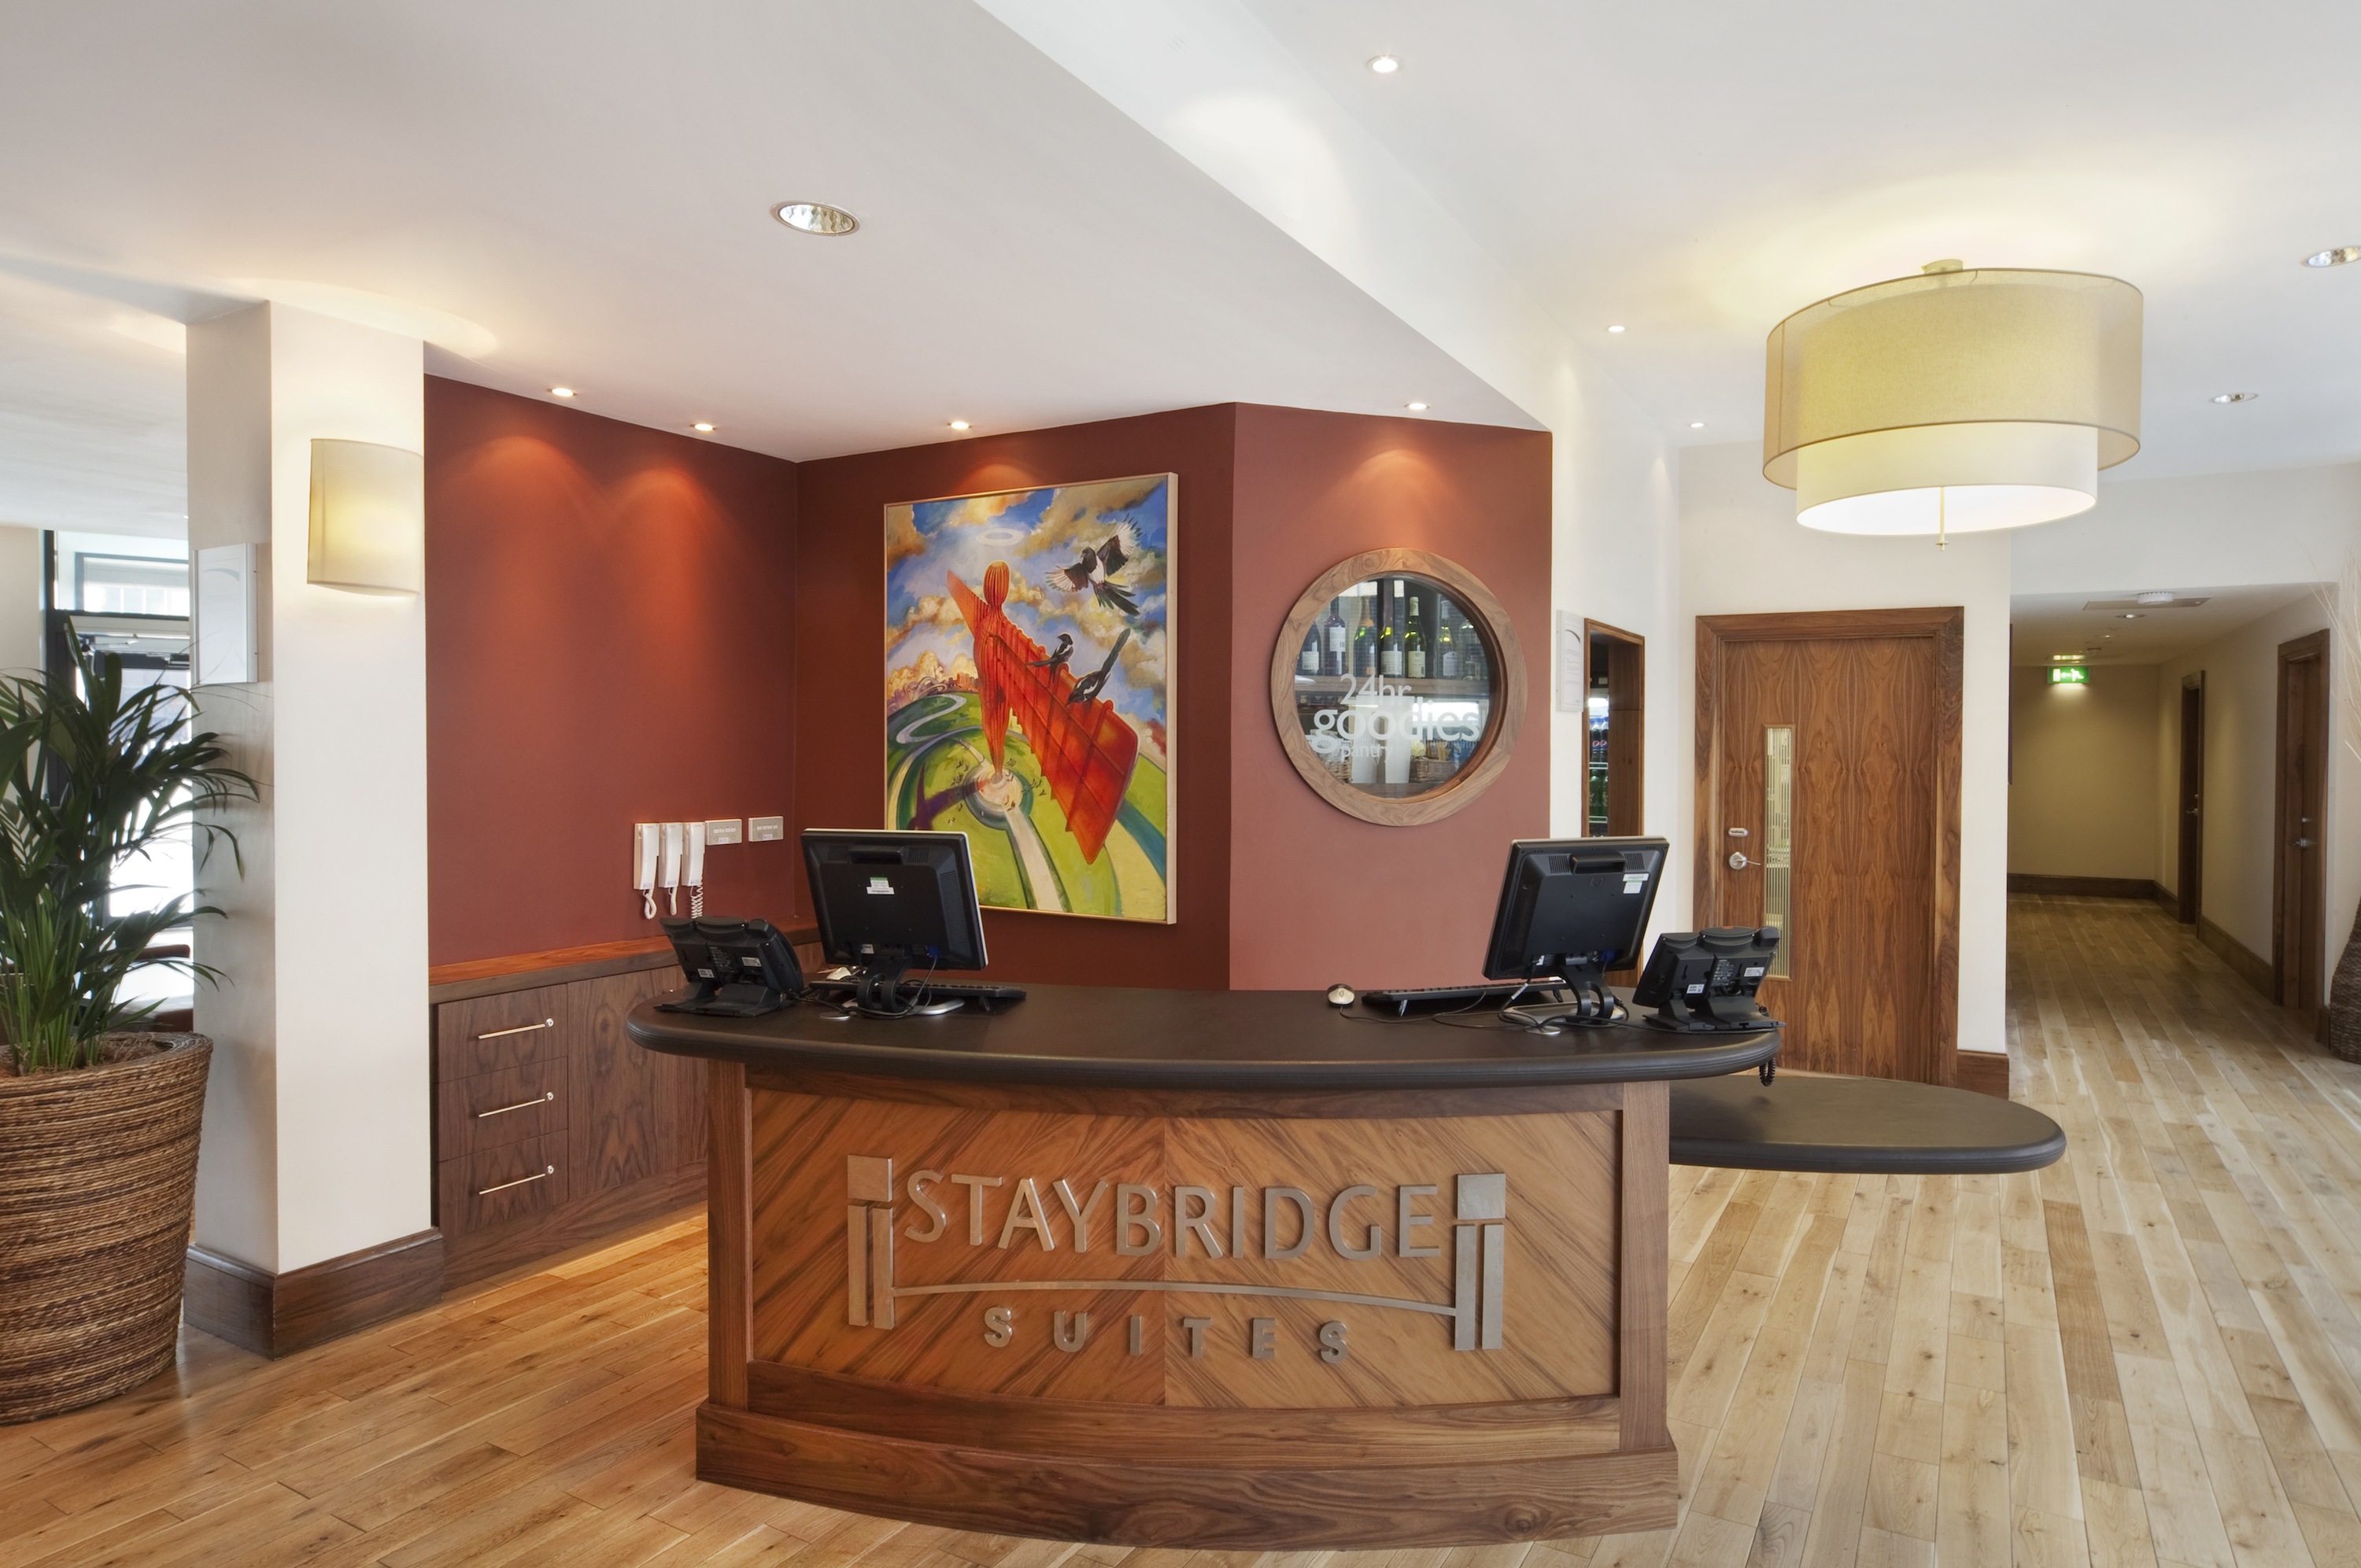 Photo of Staybridge Suites Newcastle Upon Tyne, Newcastle Upon Tyne, United Kingdom